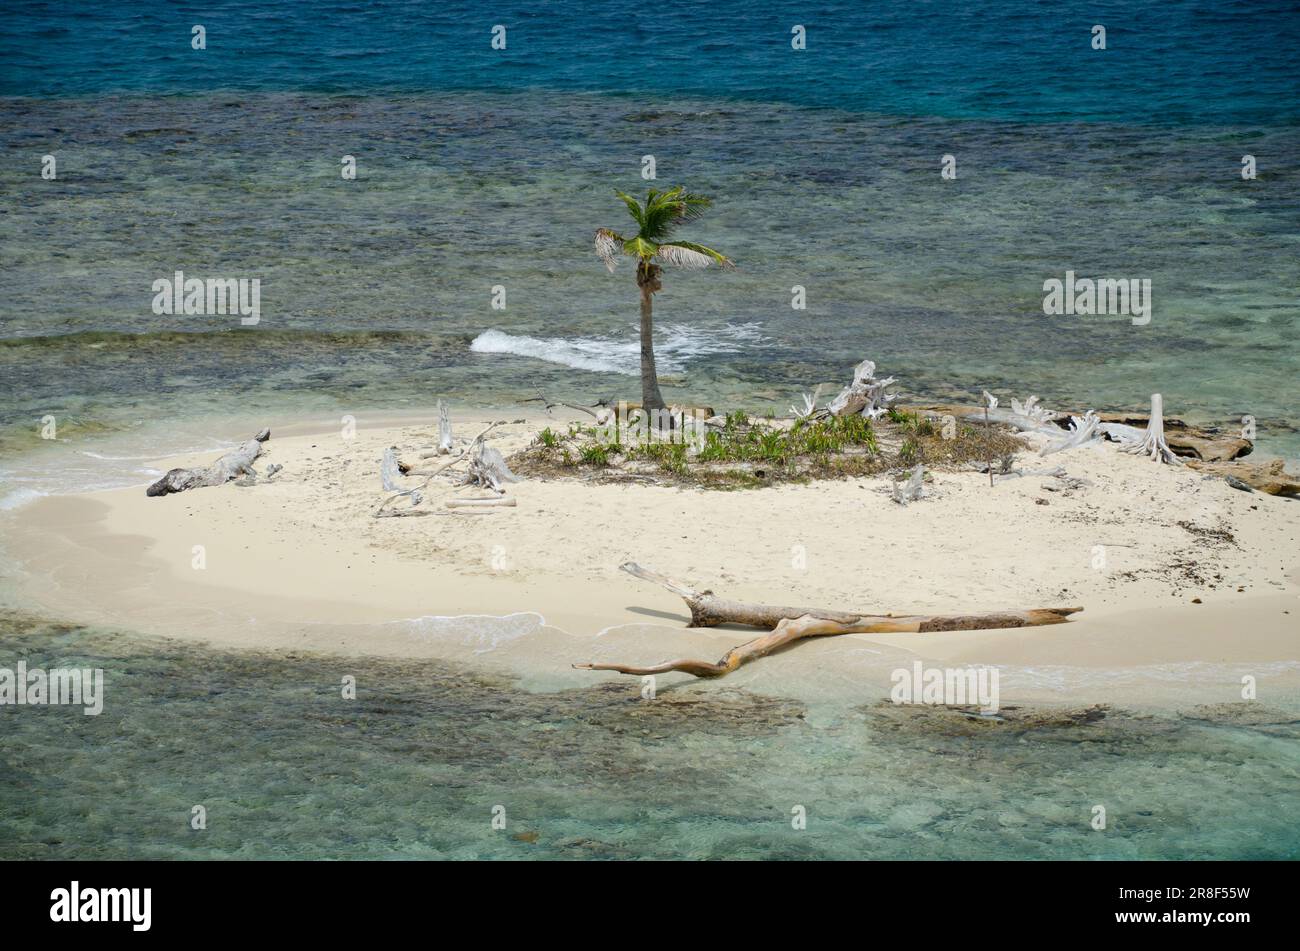 Small Tropical island in the Caribbean sea, San Blas, Panama - stock photo Stock Photo